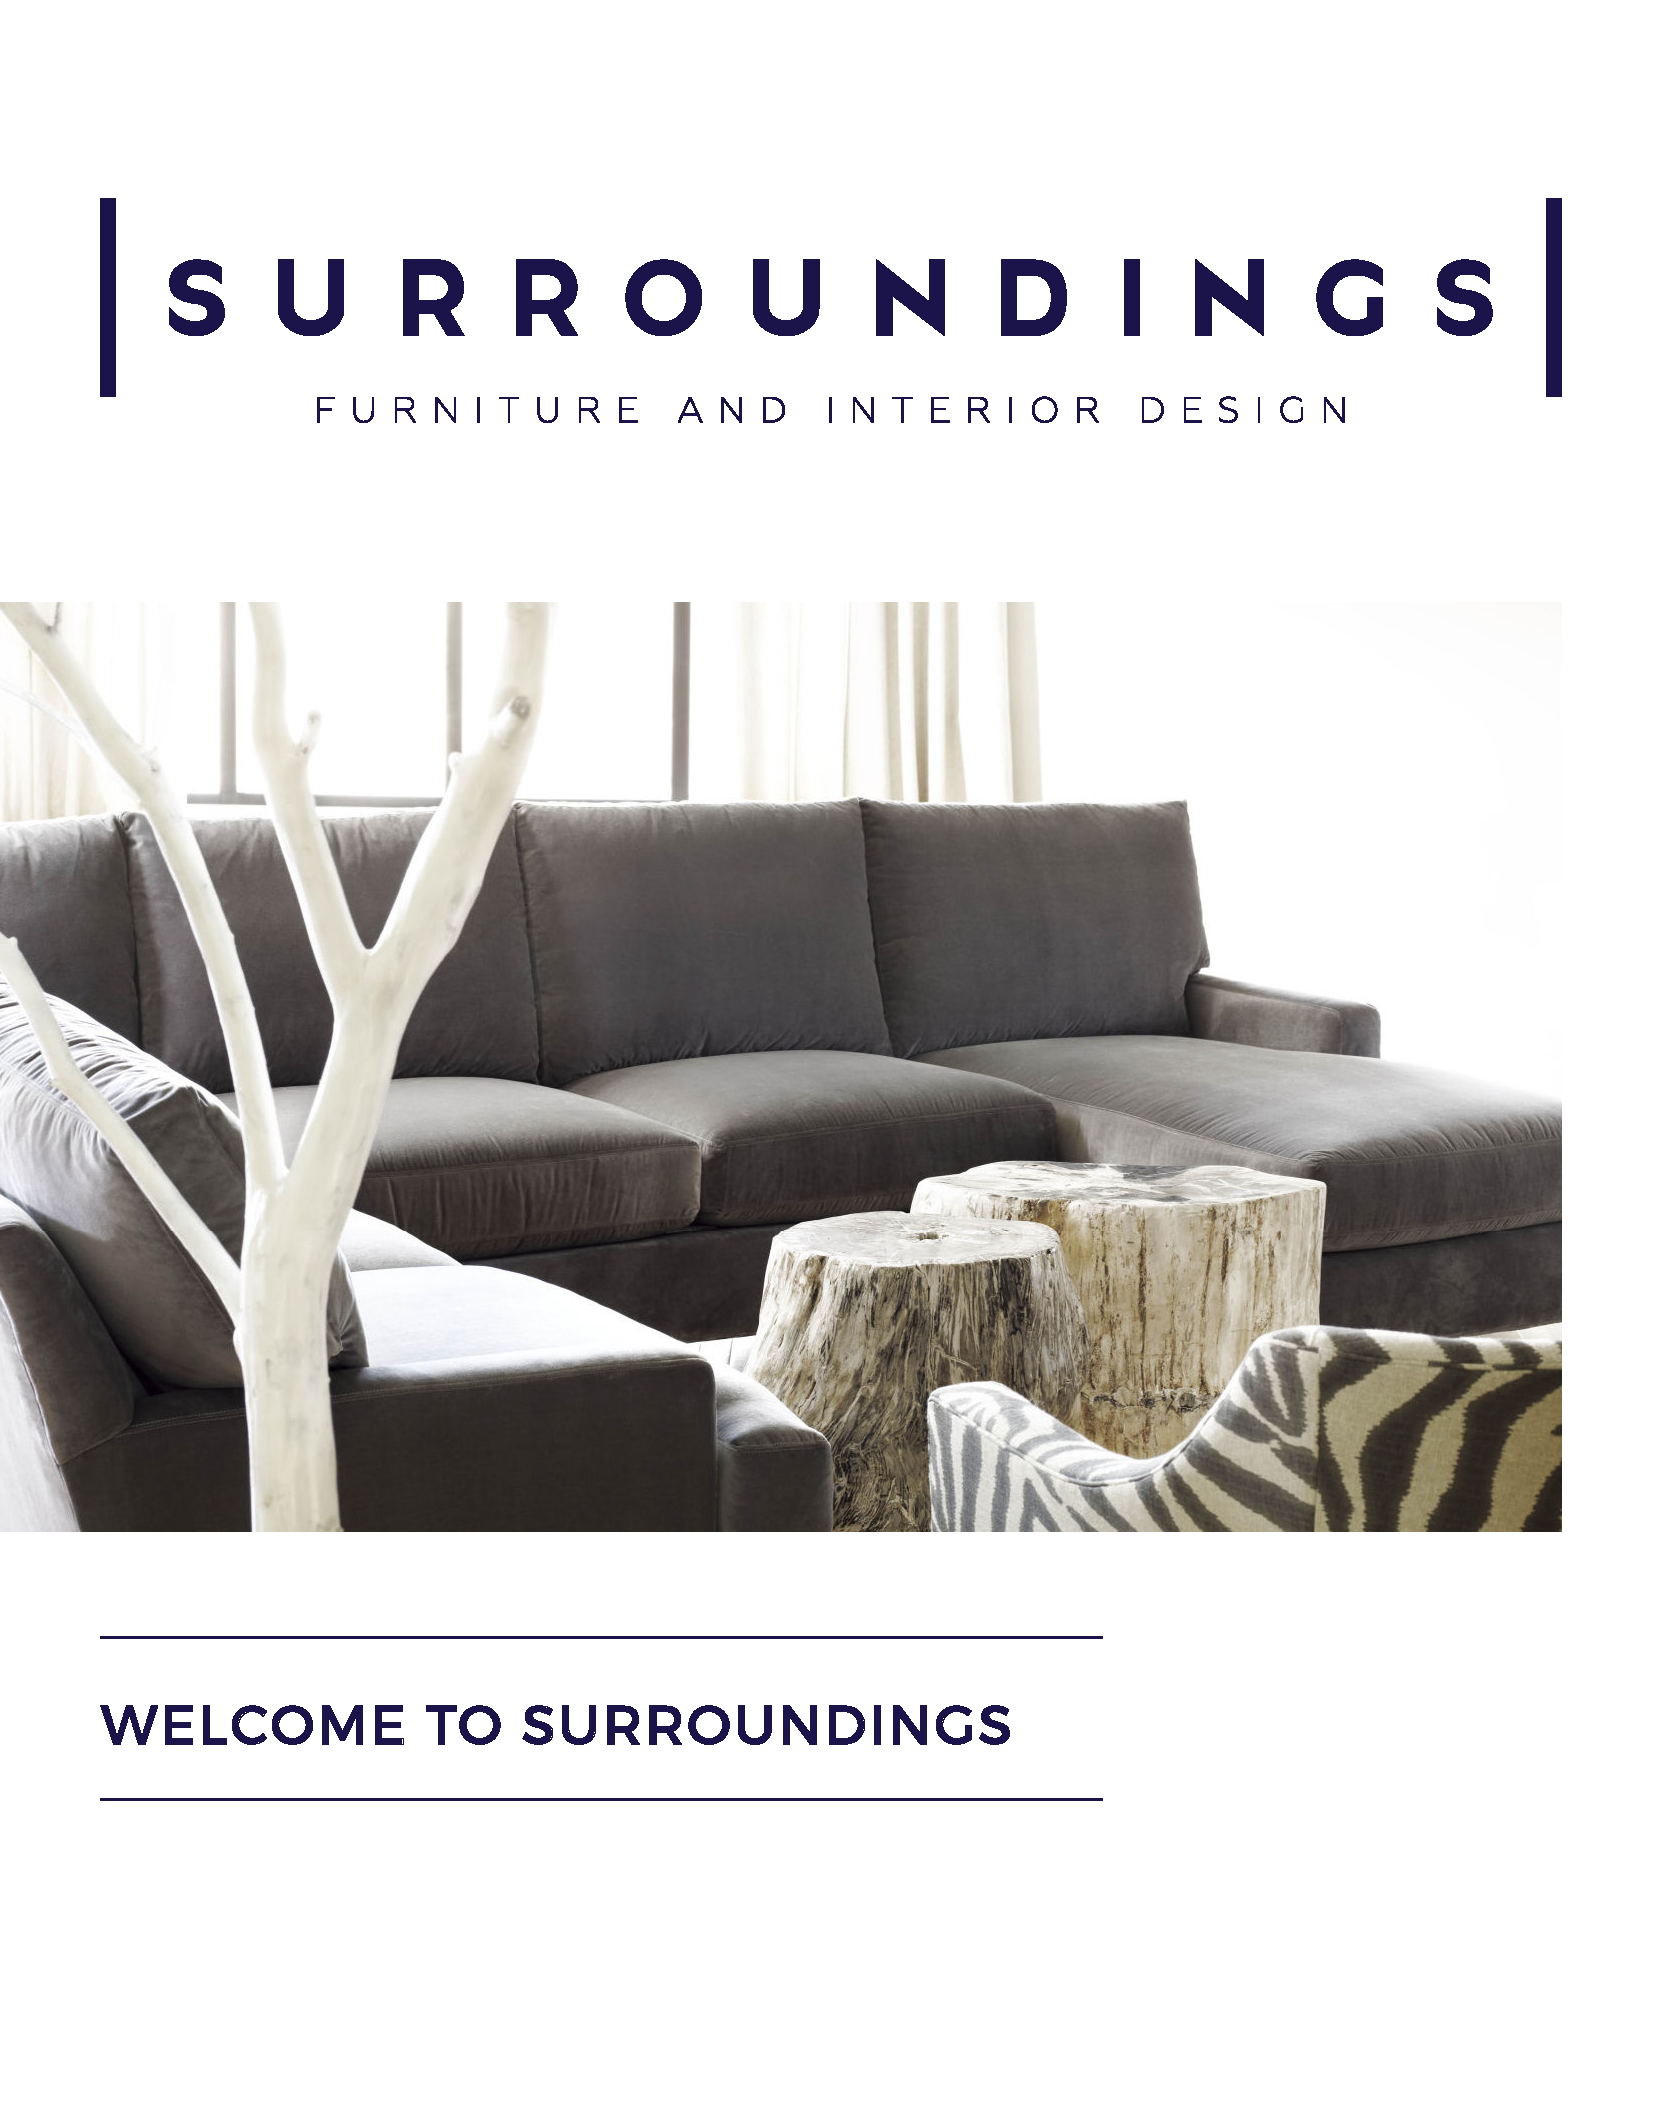 Surroundings Furniture Interior Design Terms Conditions